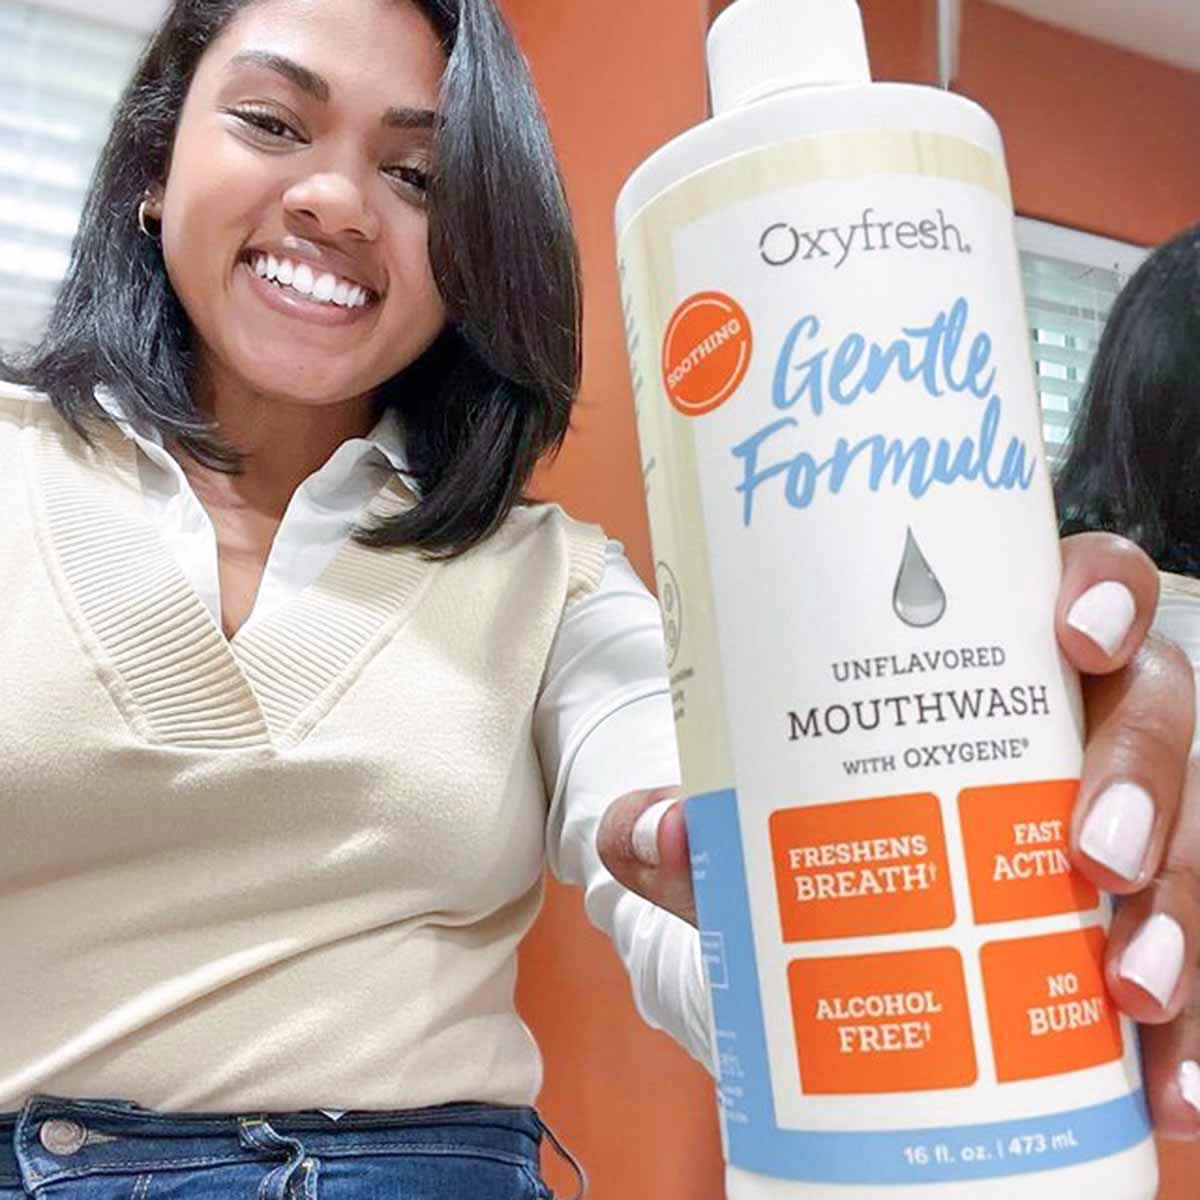 Social-Media-Post-From-Instagram-User-_megandonaw-smiling-holding-a-bottle-of-oxyfresh-gentle-formula-fluoride-free-mouthwash-for-bad-breath